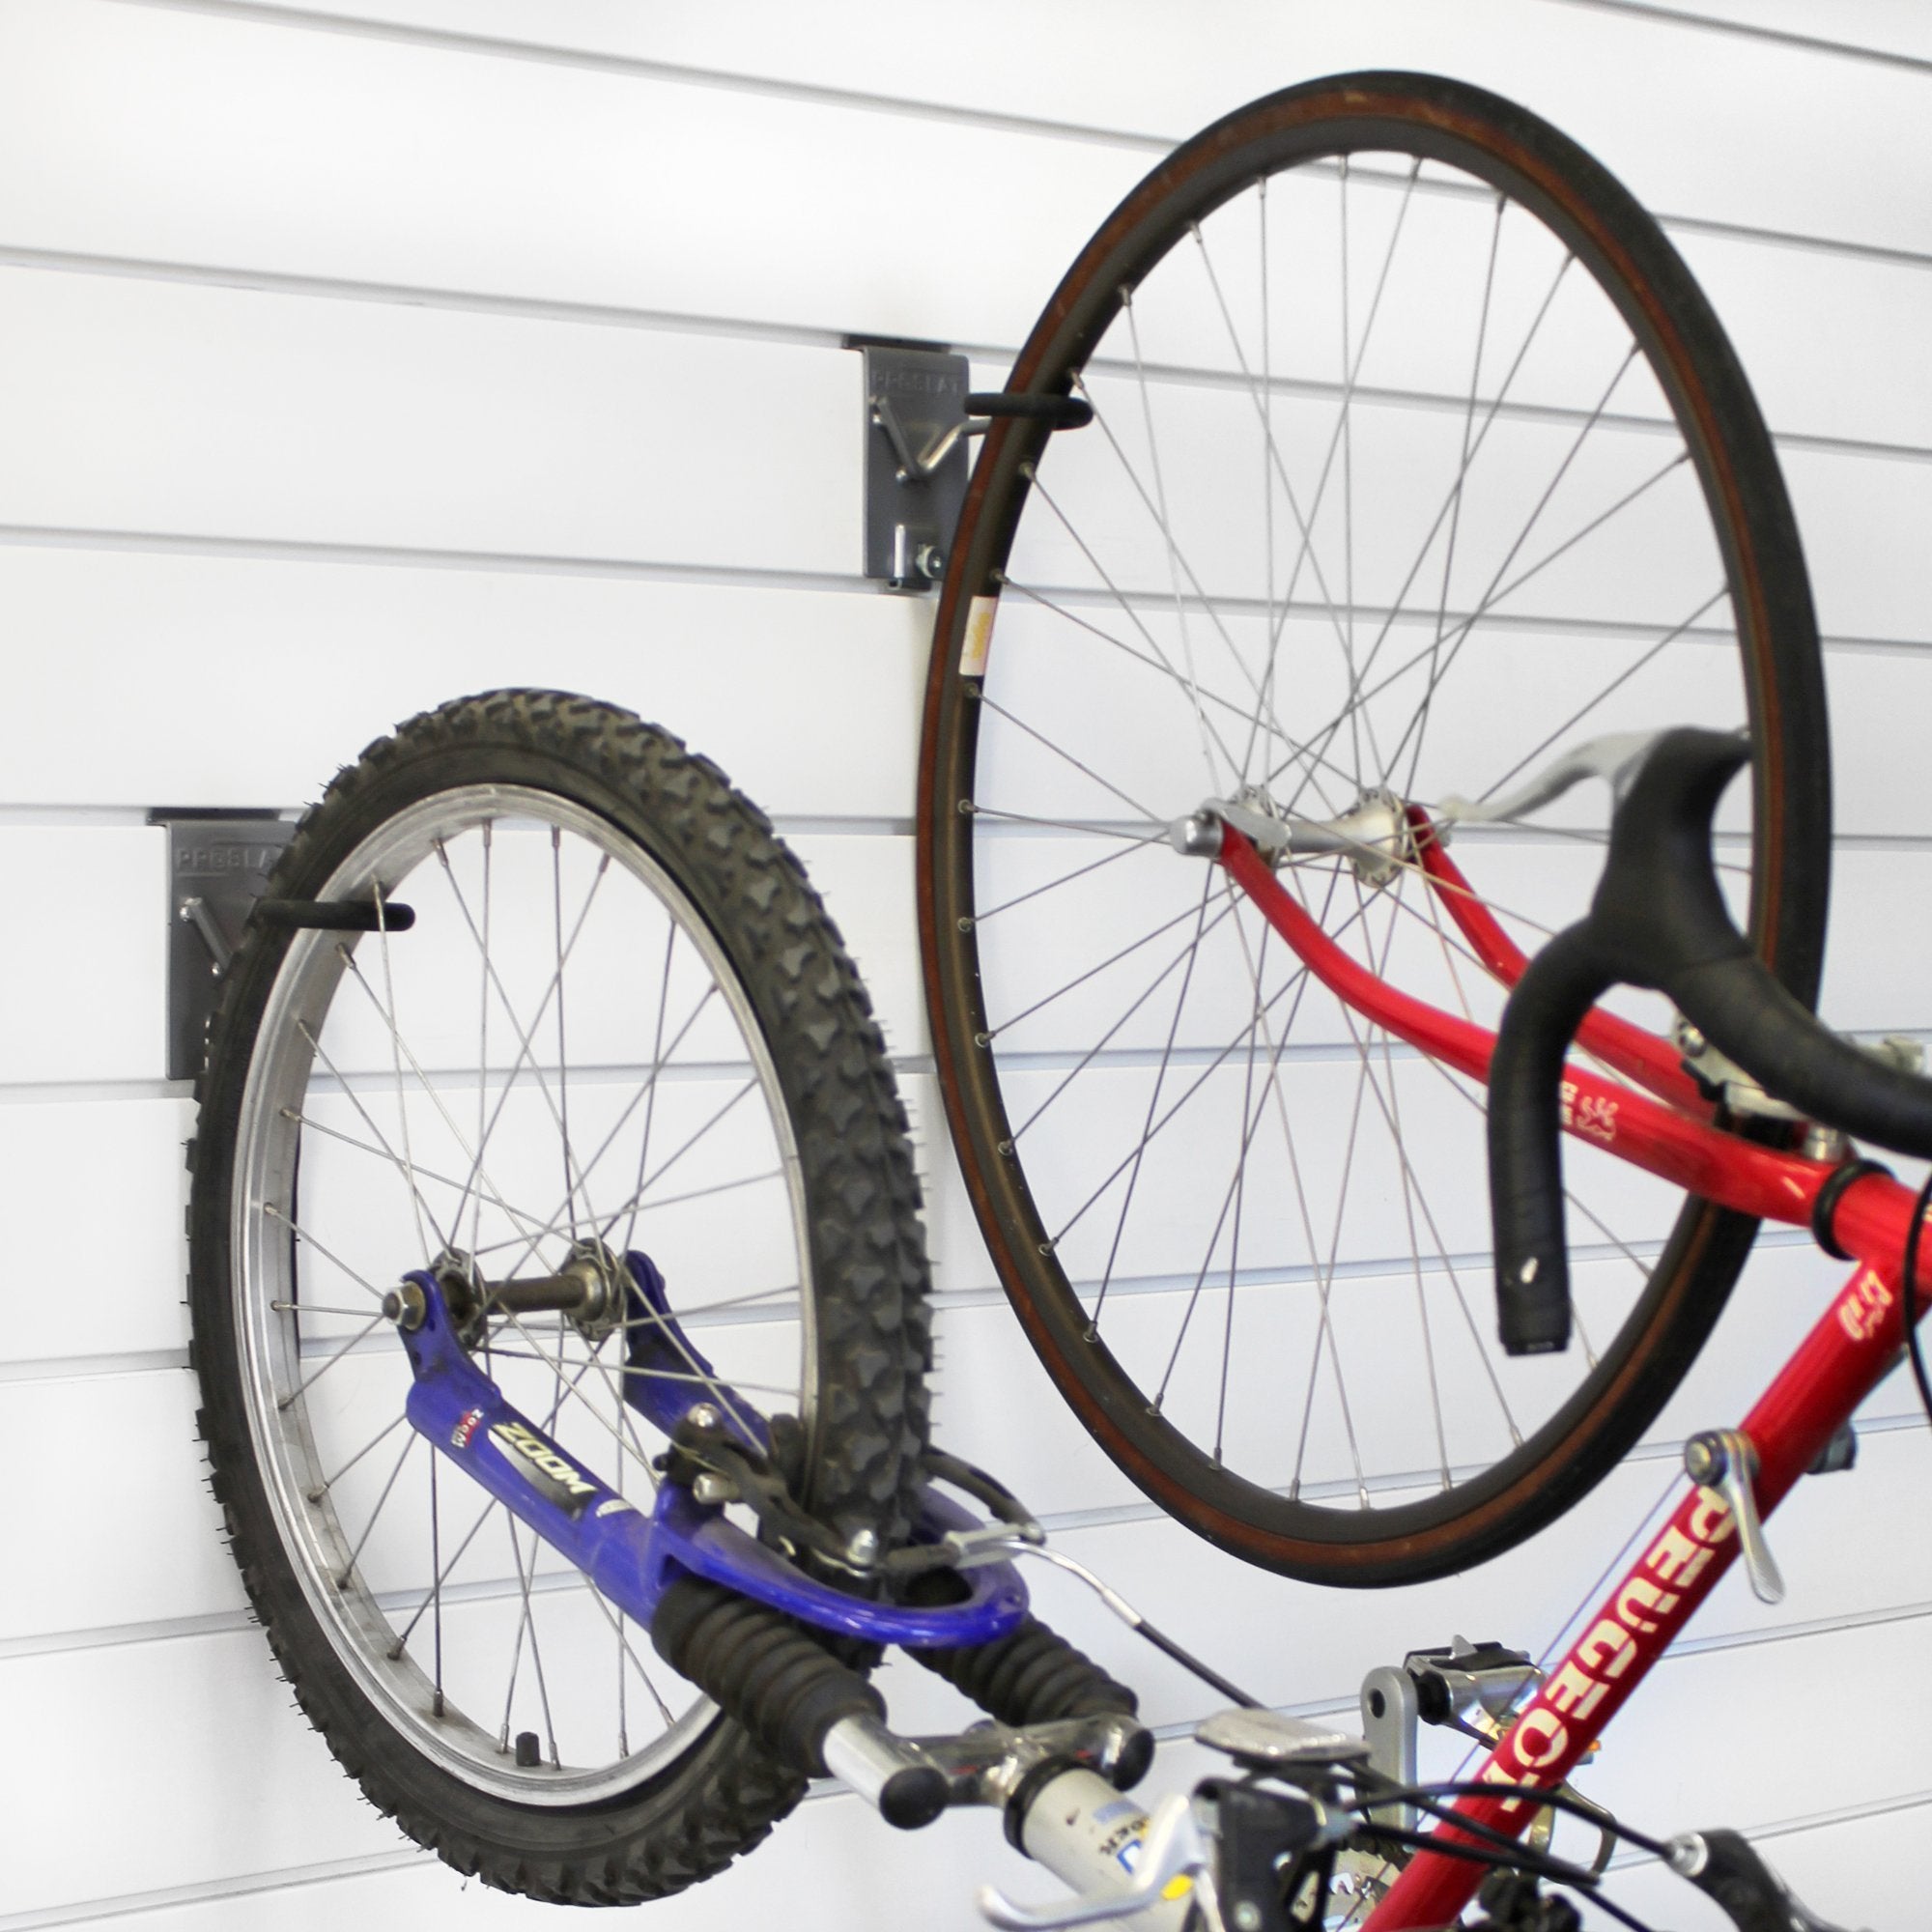 Top rated proslat 13028 vertical bike hook designed for proslat pvc slatwall